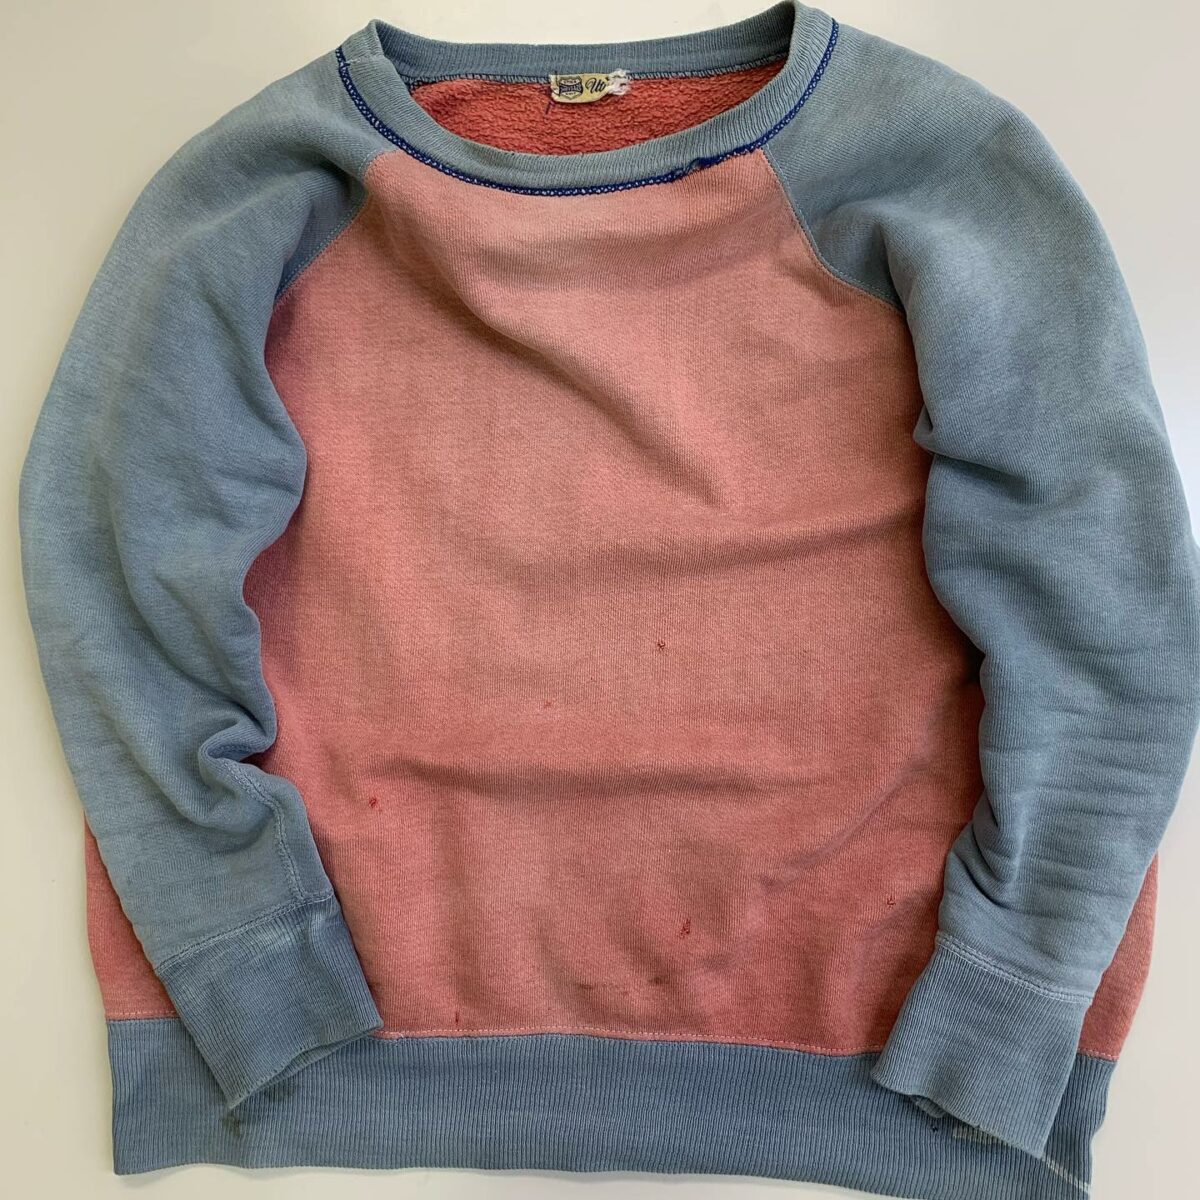 Sweatshirt from Ryota Yamasaki's collection